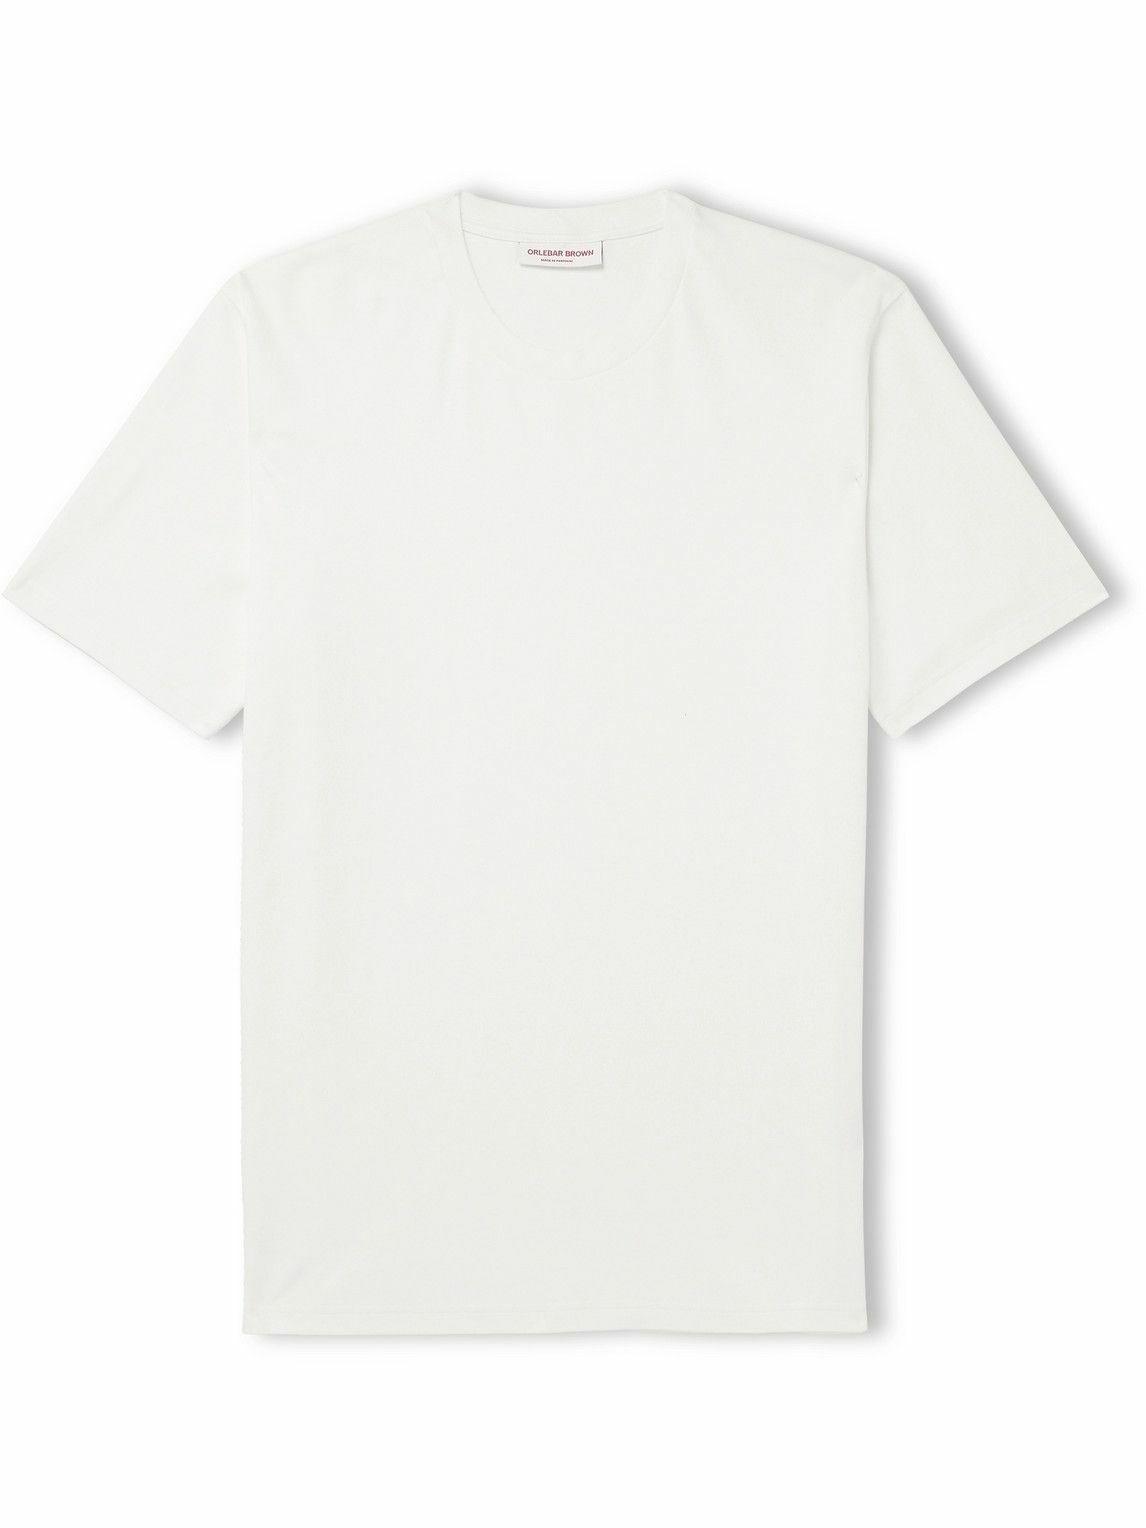 Photo: Orlebar Brown - Deckard Cotton-Jersey T-Shirt - White